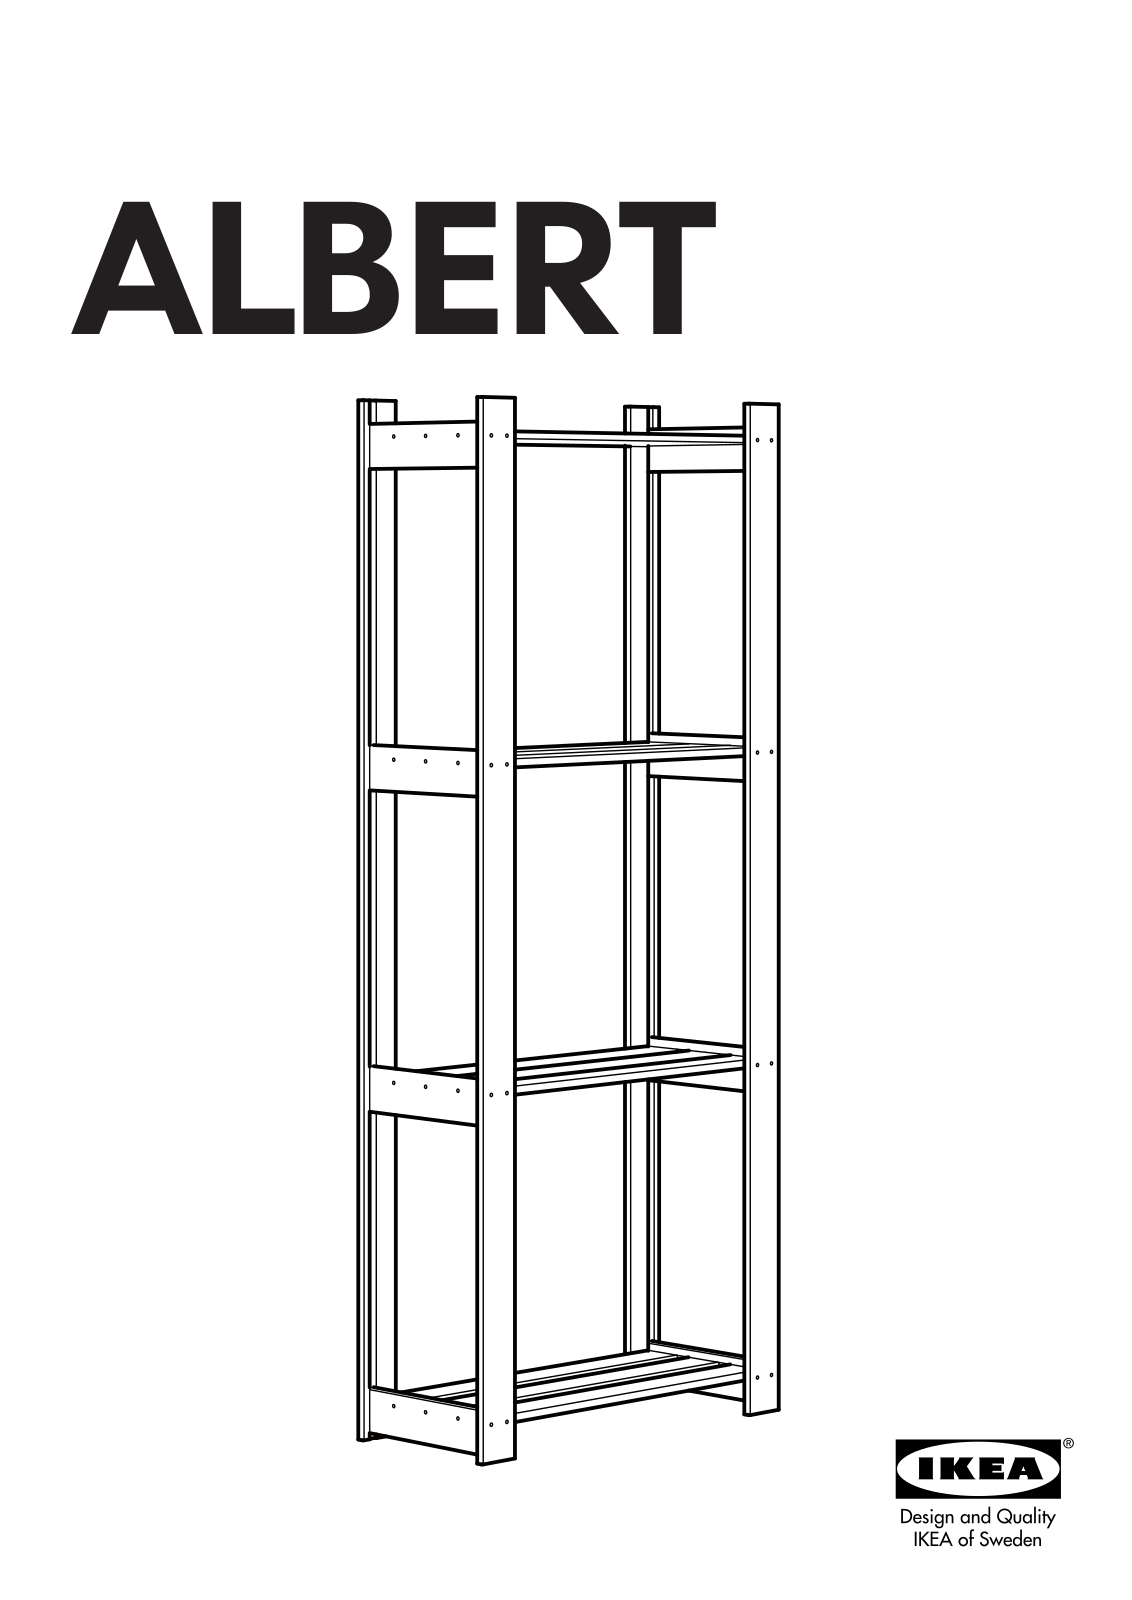 IKEA ALBERT User Manual